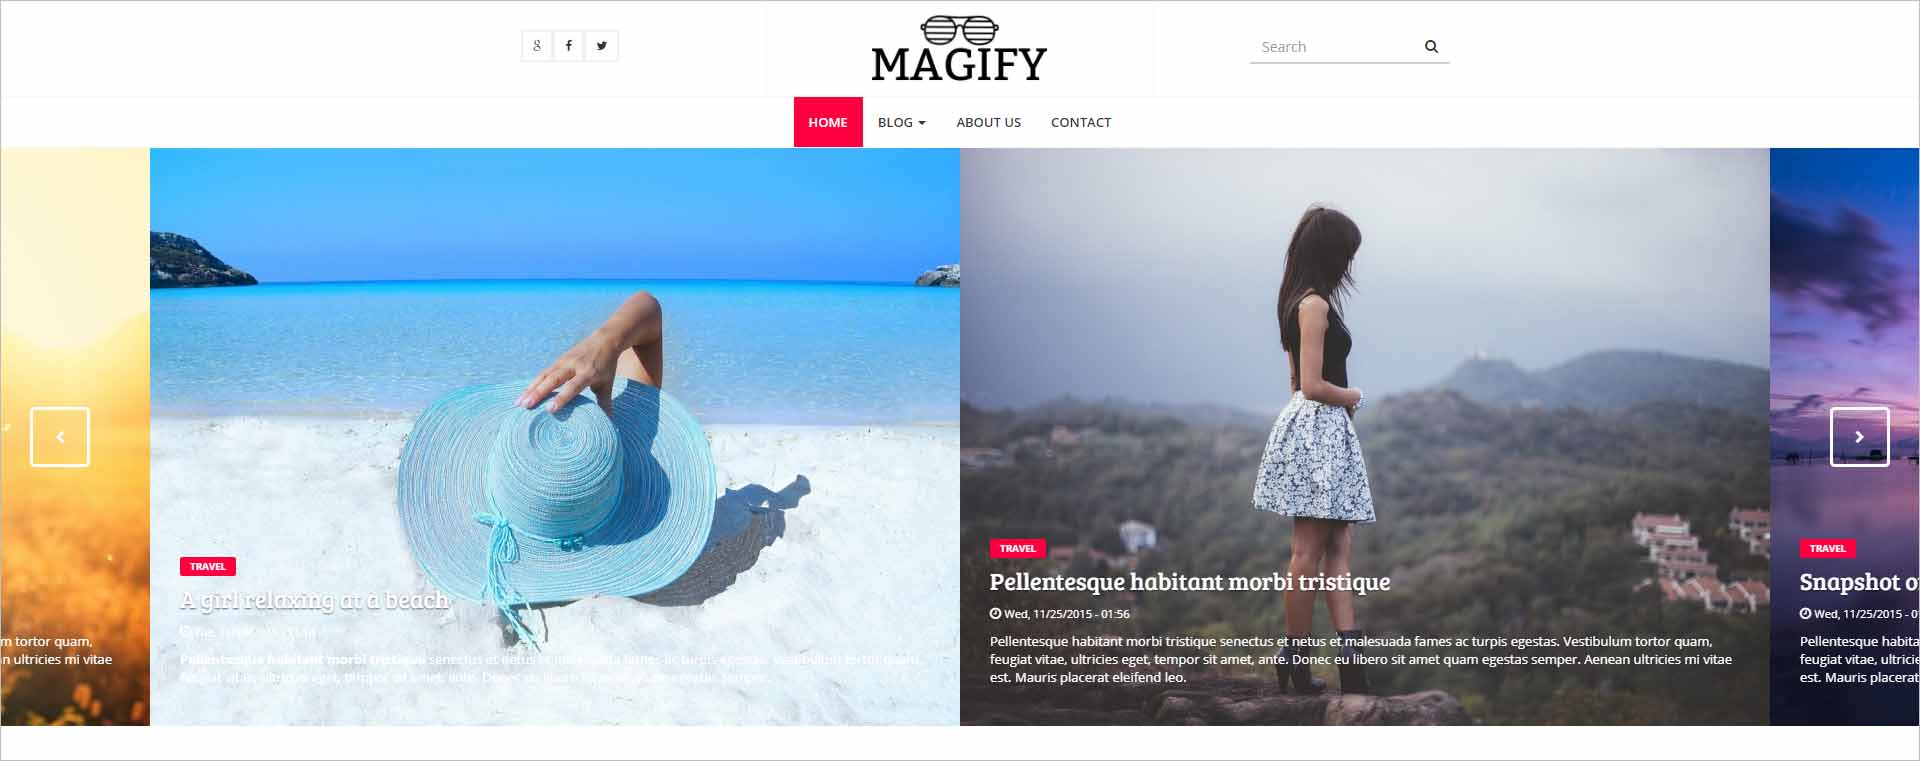 Magify A Magazine Theme